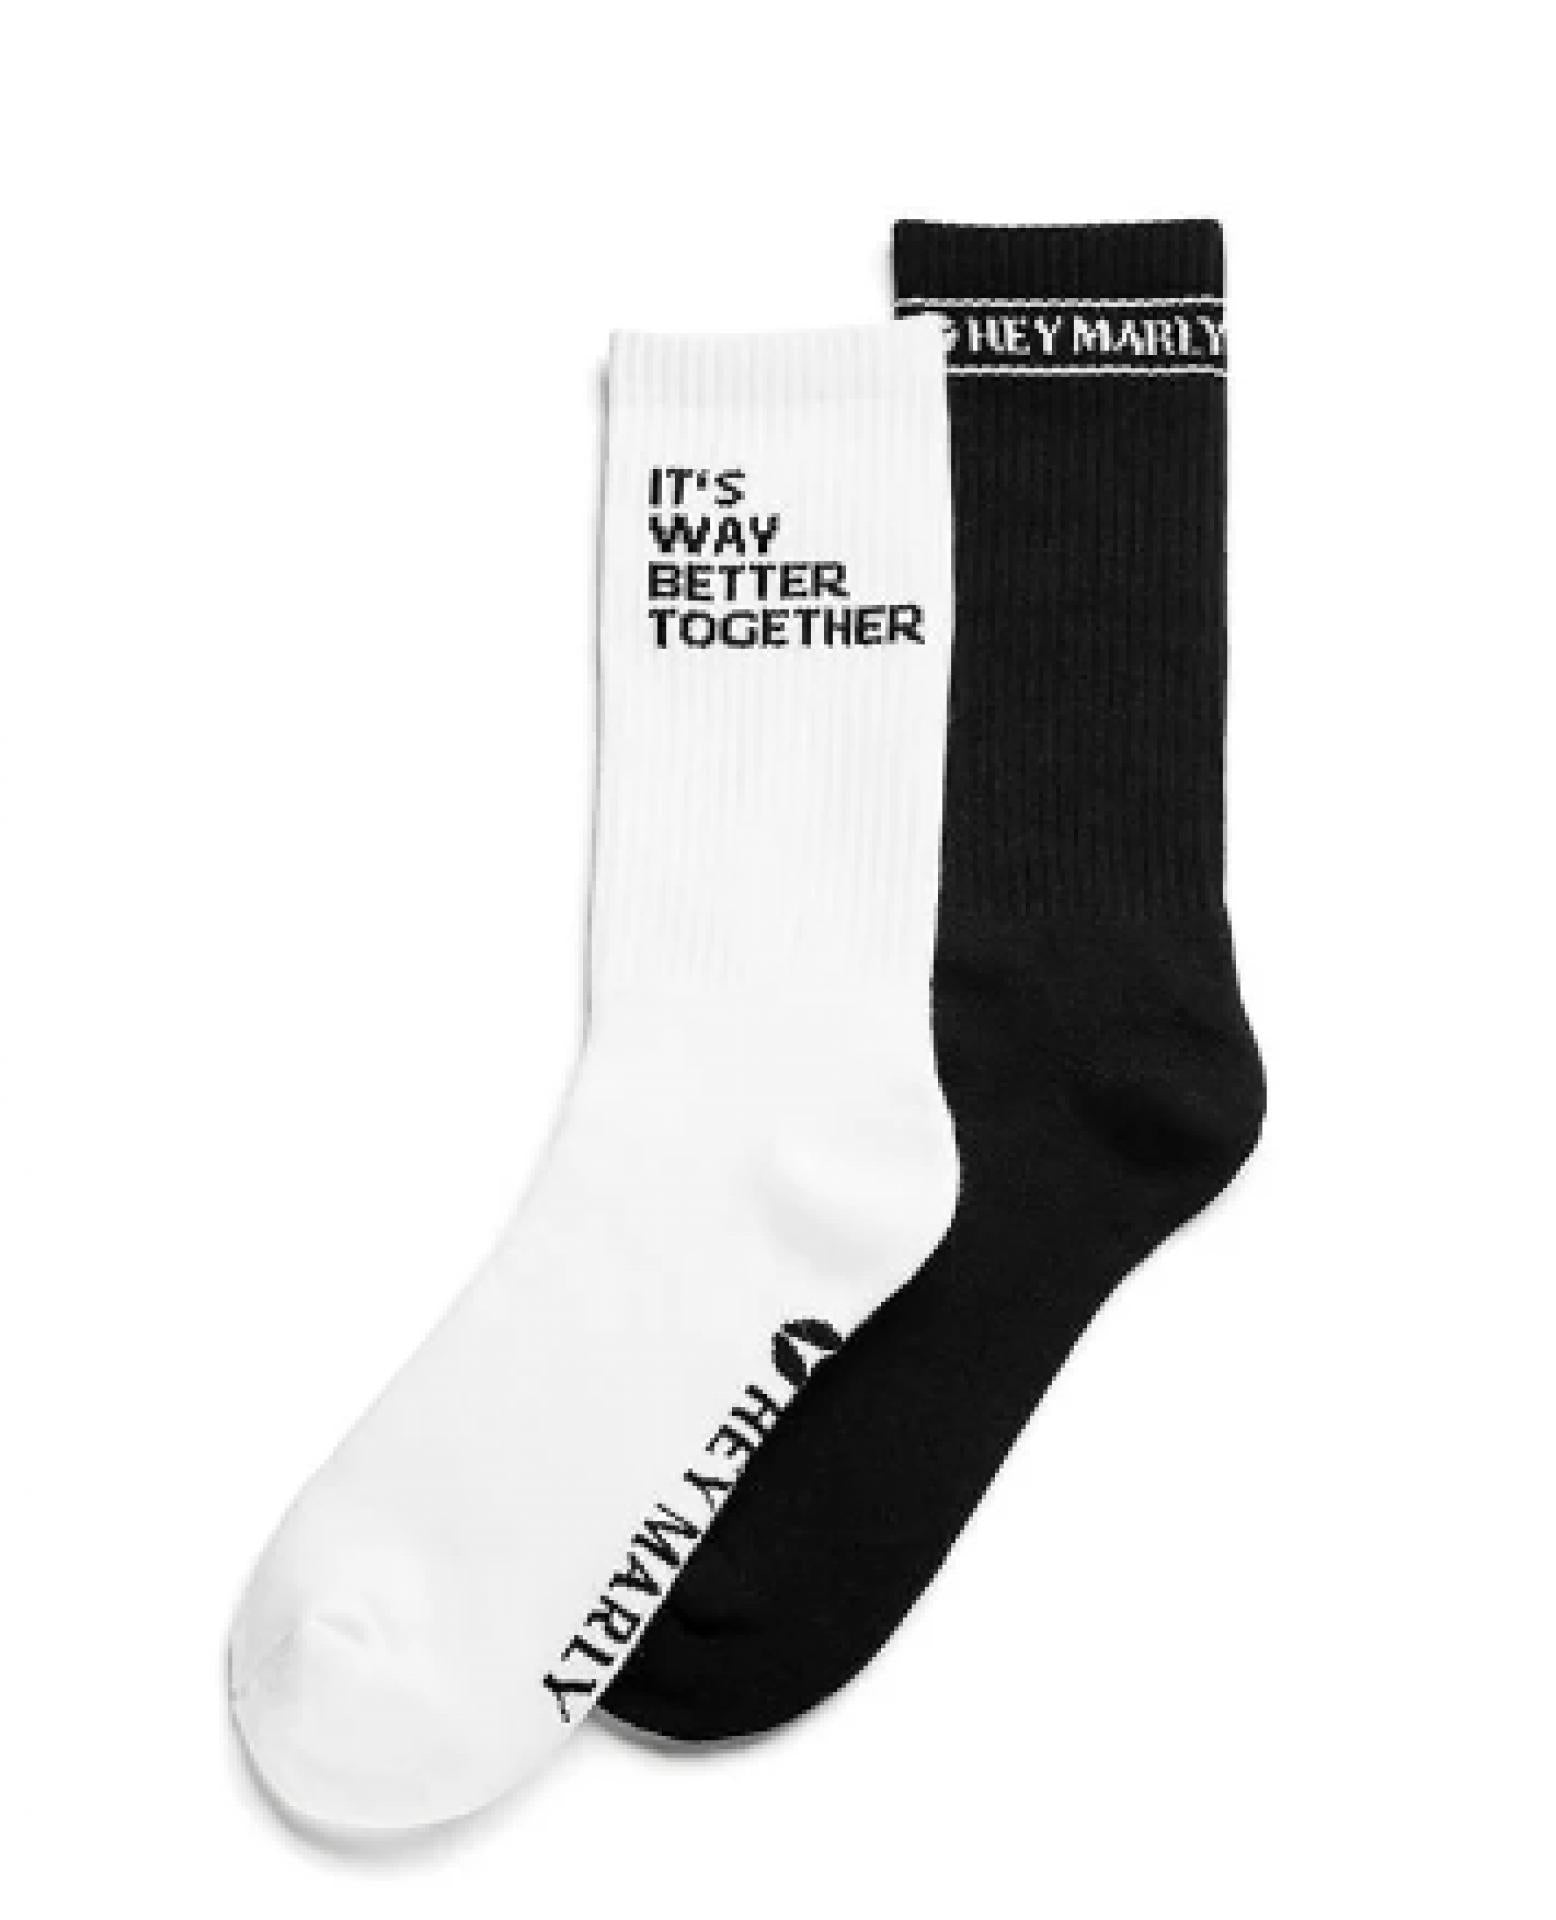 Hey Marly Socks Bundle Socken Pack / Black + White